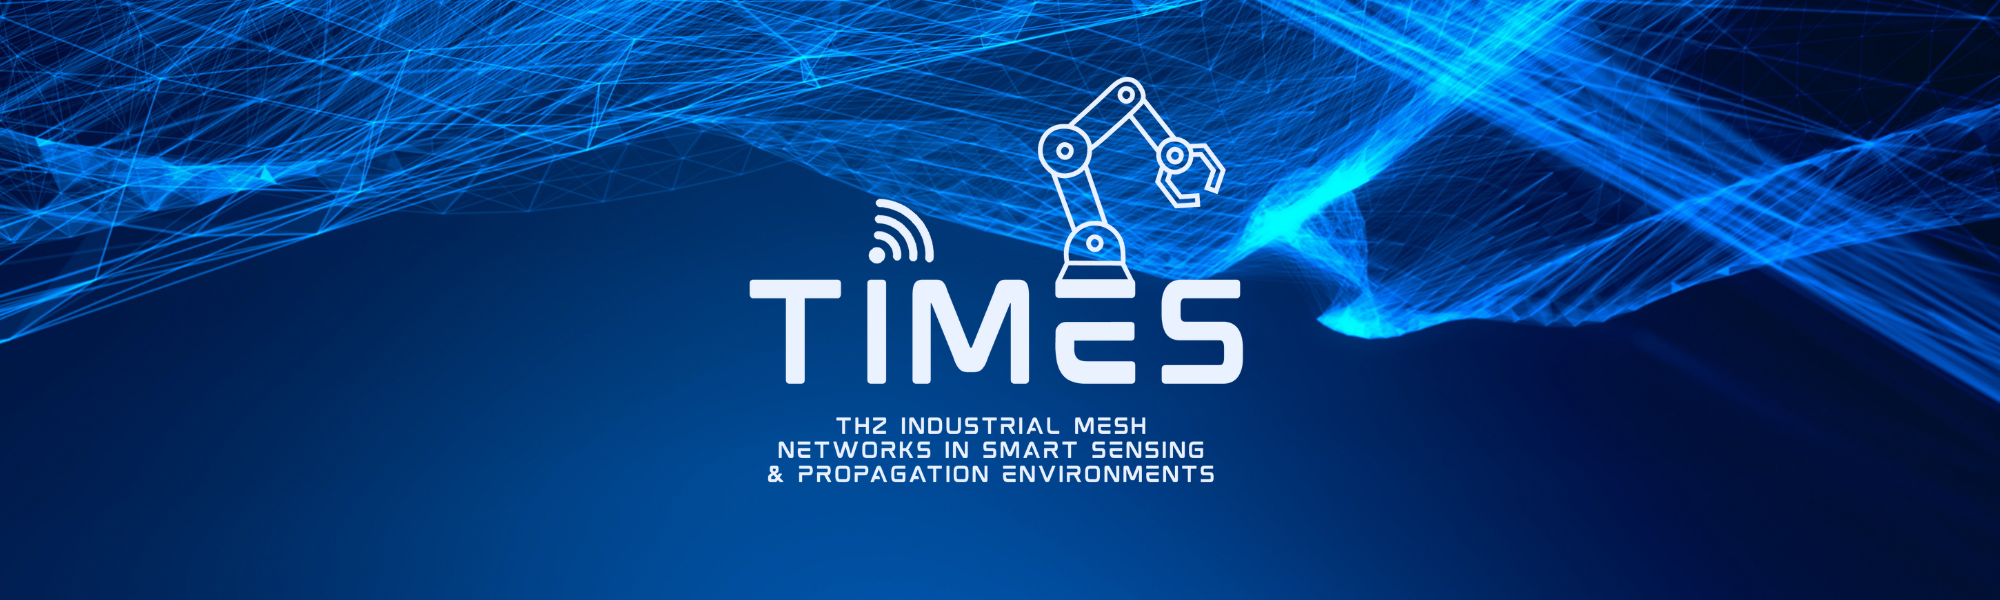 progetto times 6g reti wireless innovaative